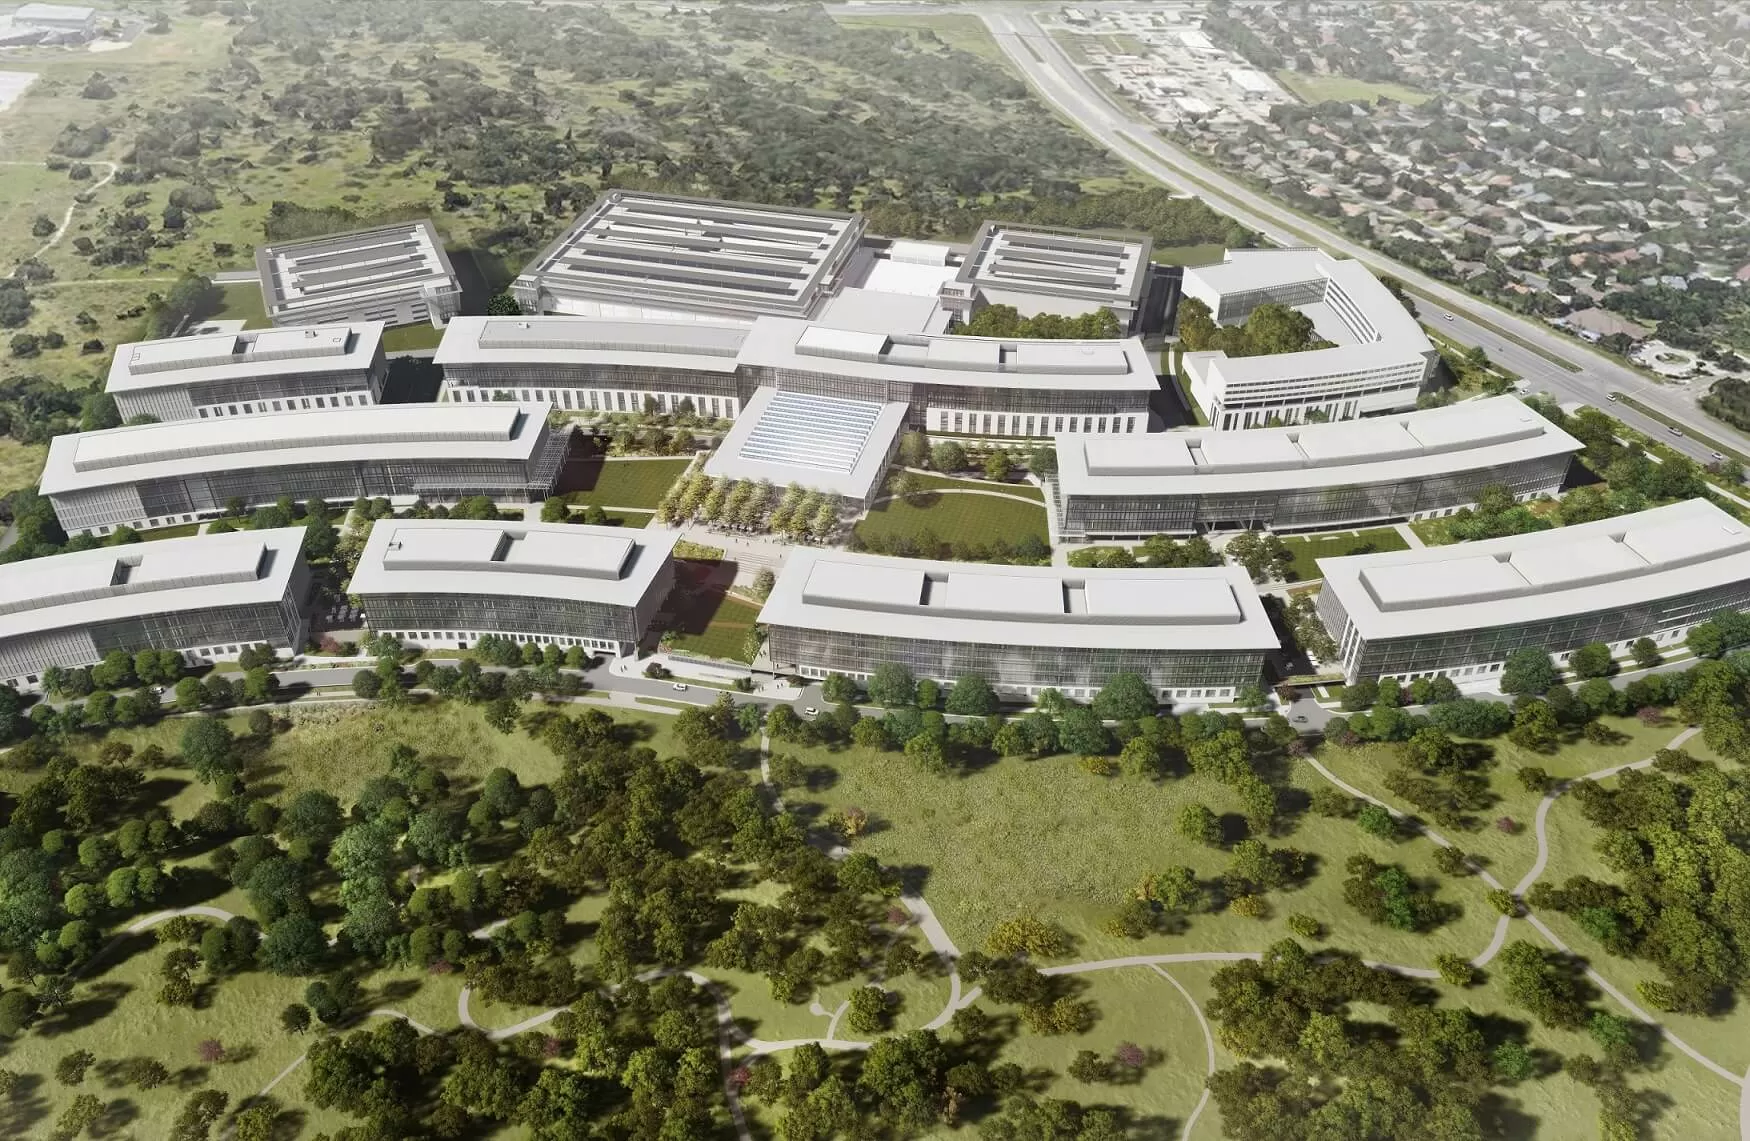 Apple will build a $1 billion campus in Austin, Texas